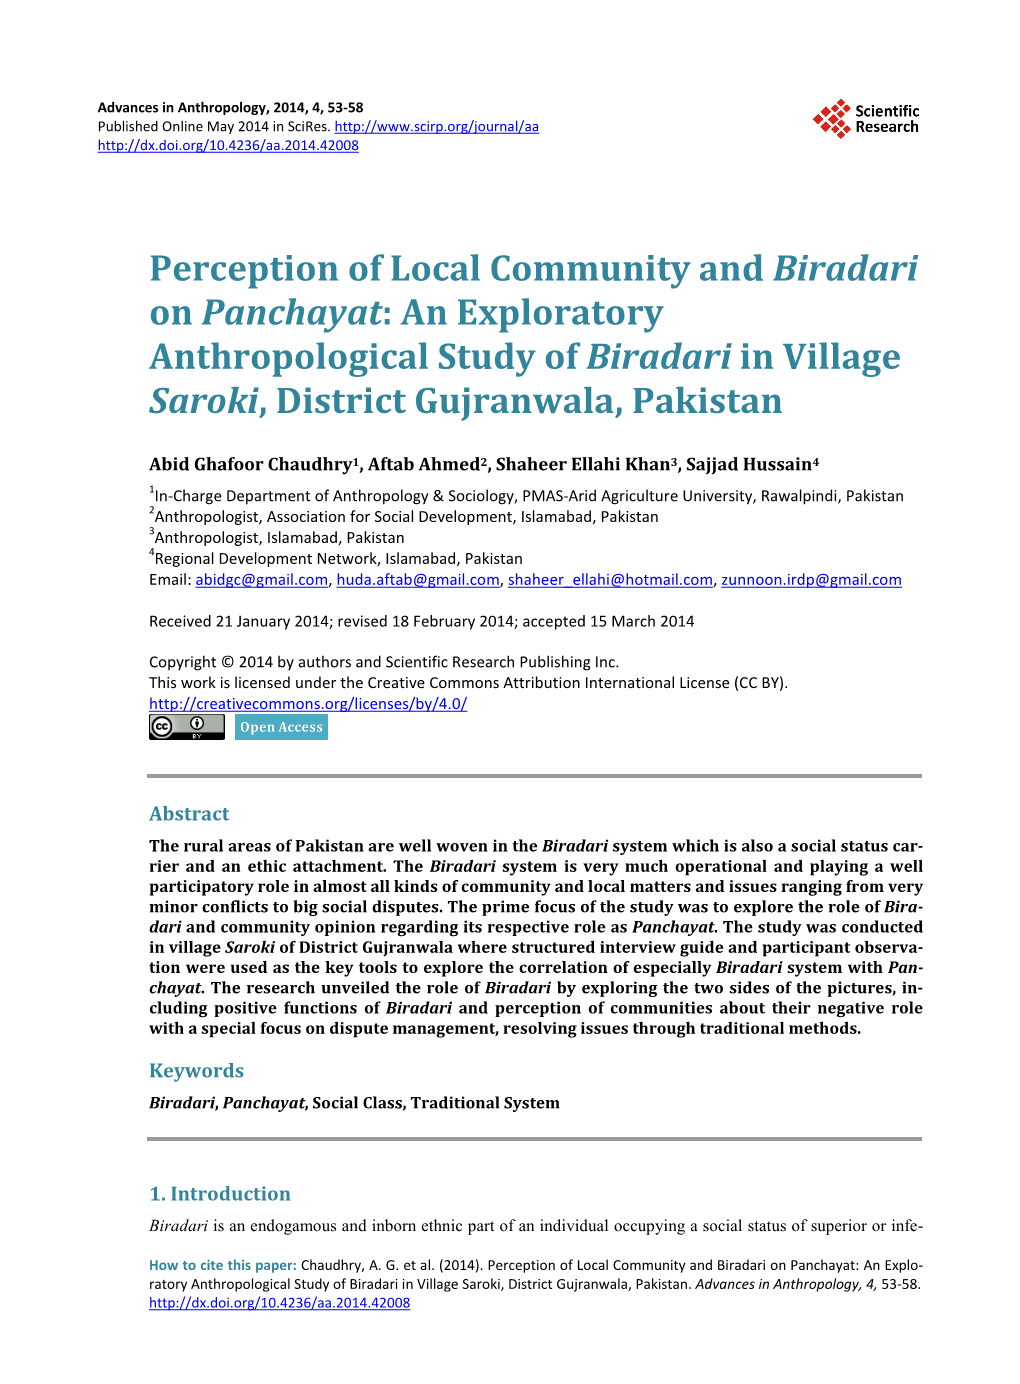 Perception of Local Community and Biradari on Panchayat: an Exploratory Anthropological Study of Biradari in Village Saroki, District Gujranwala, Pakistan